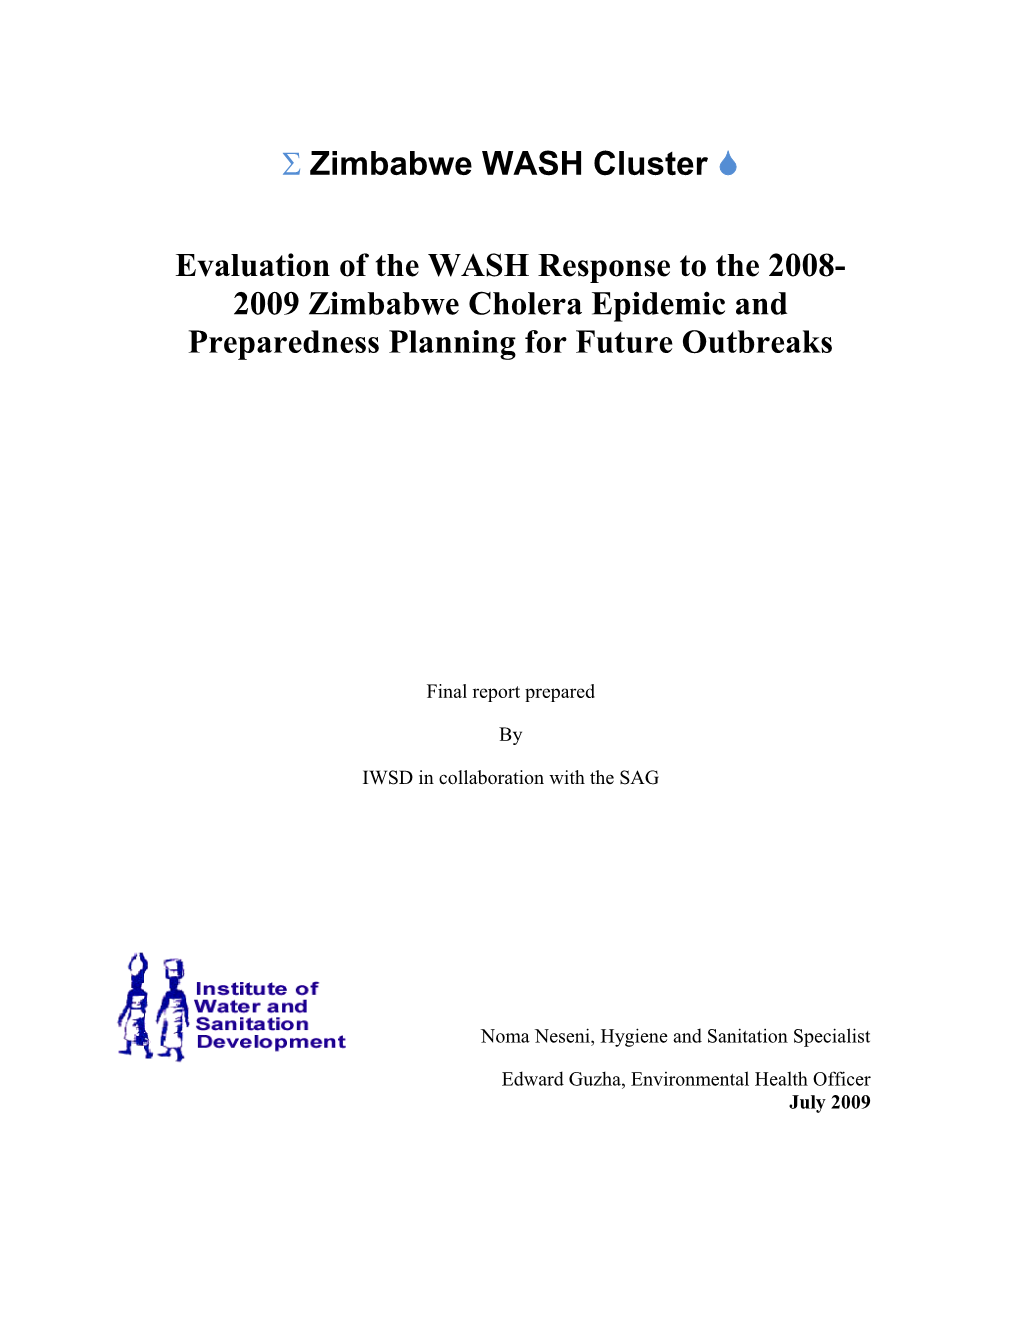 Evaluation of the Wash Cluster Cholera Response